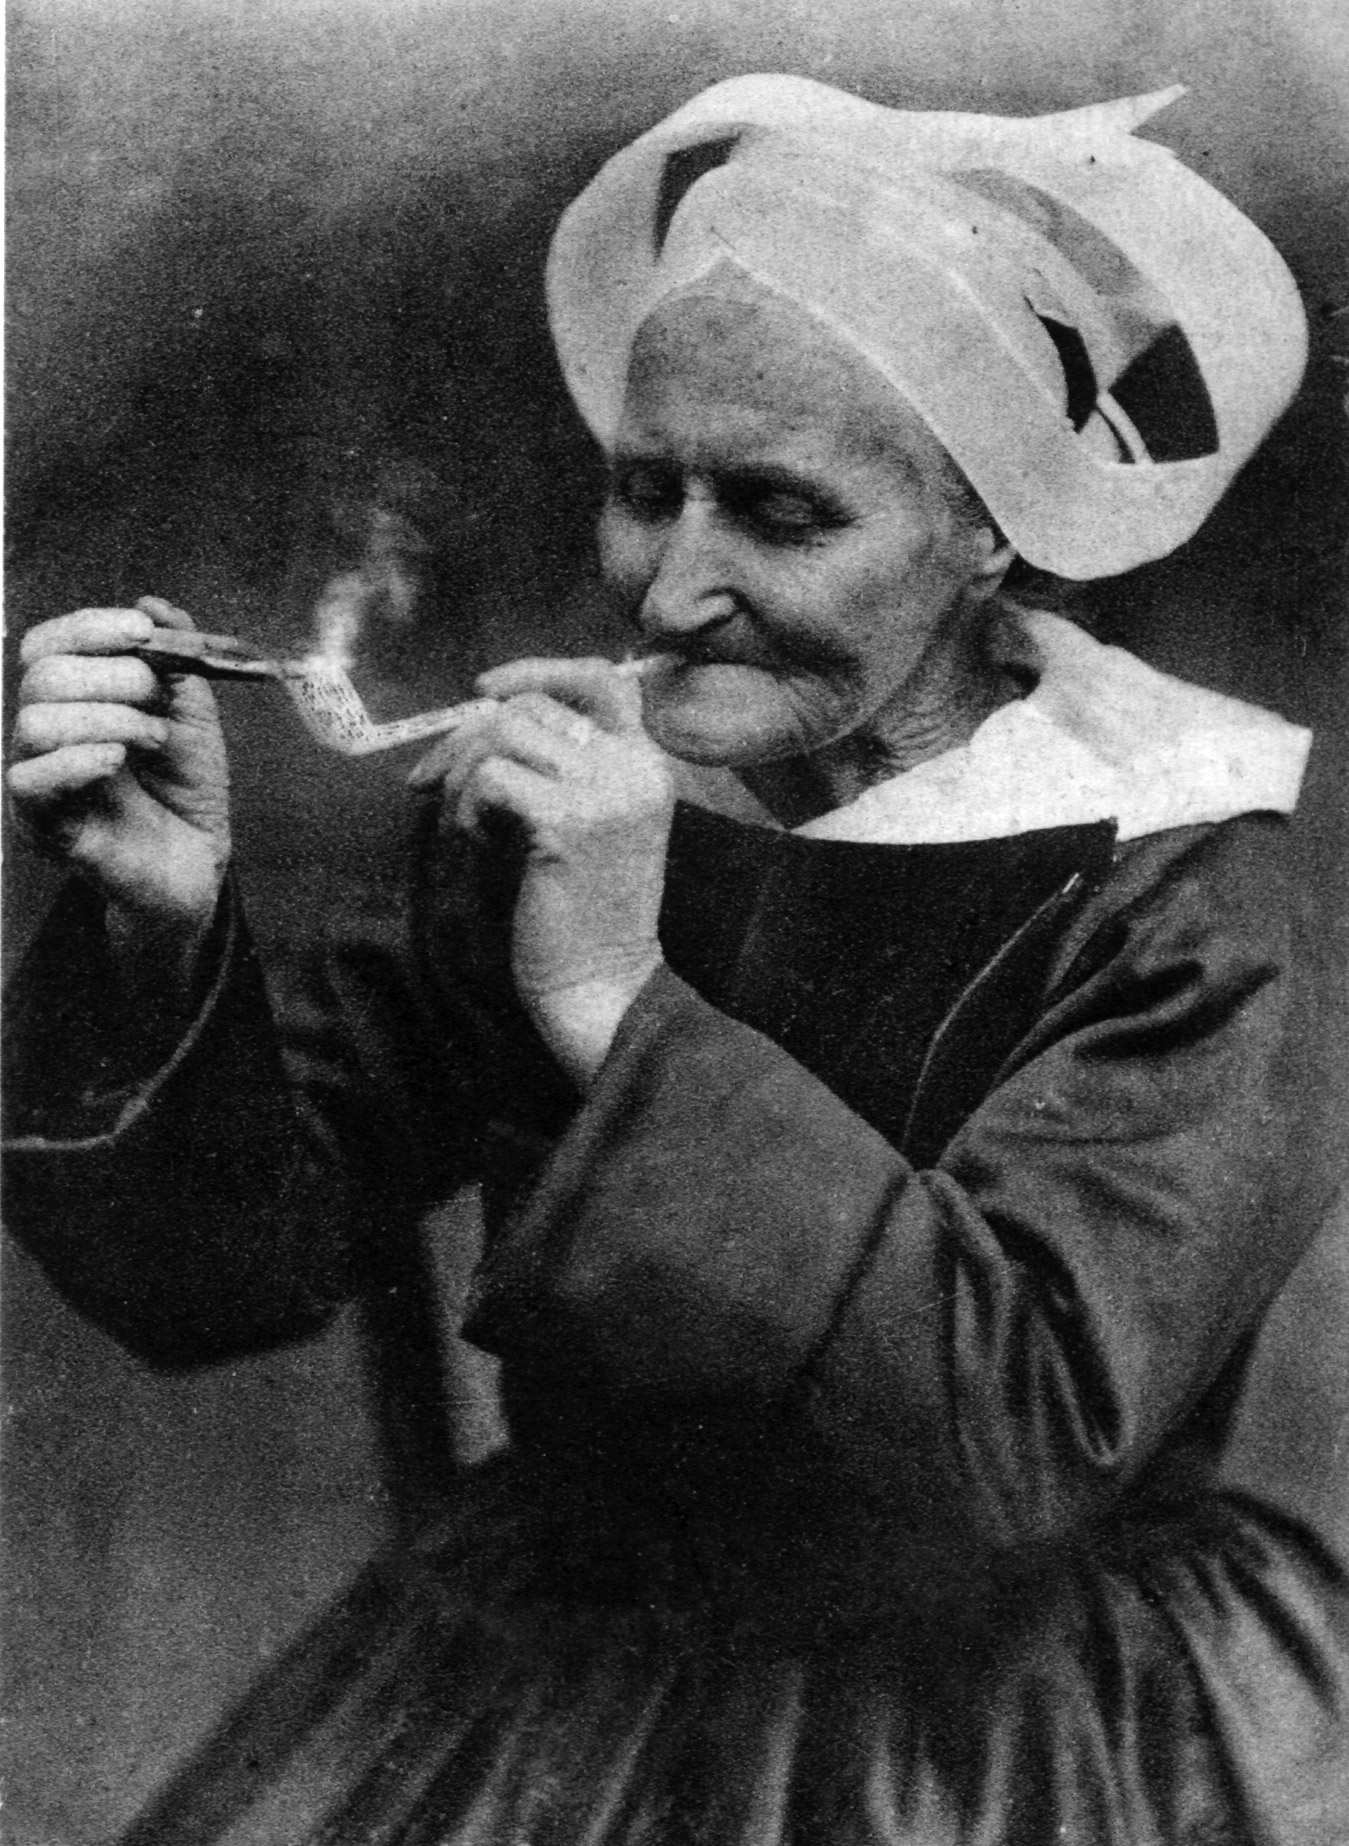 http://jrandomimage.com/images/old-woman-smoking.jpg